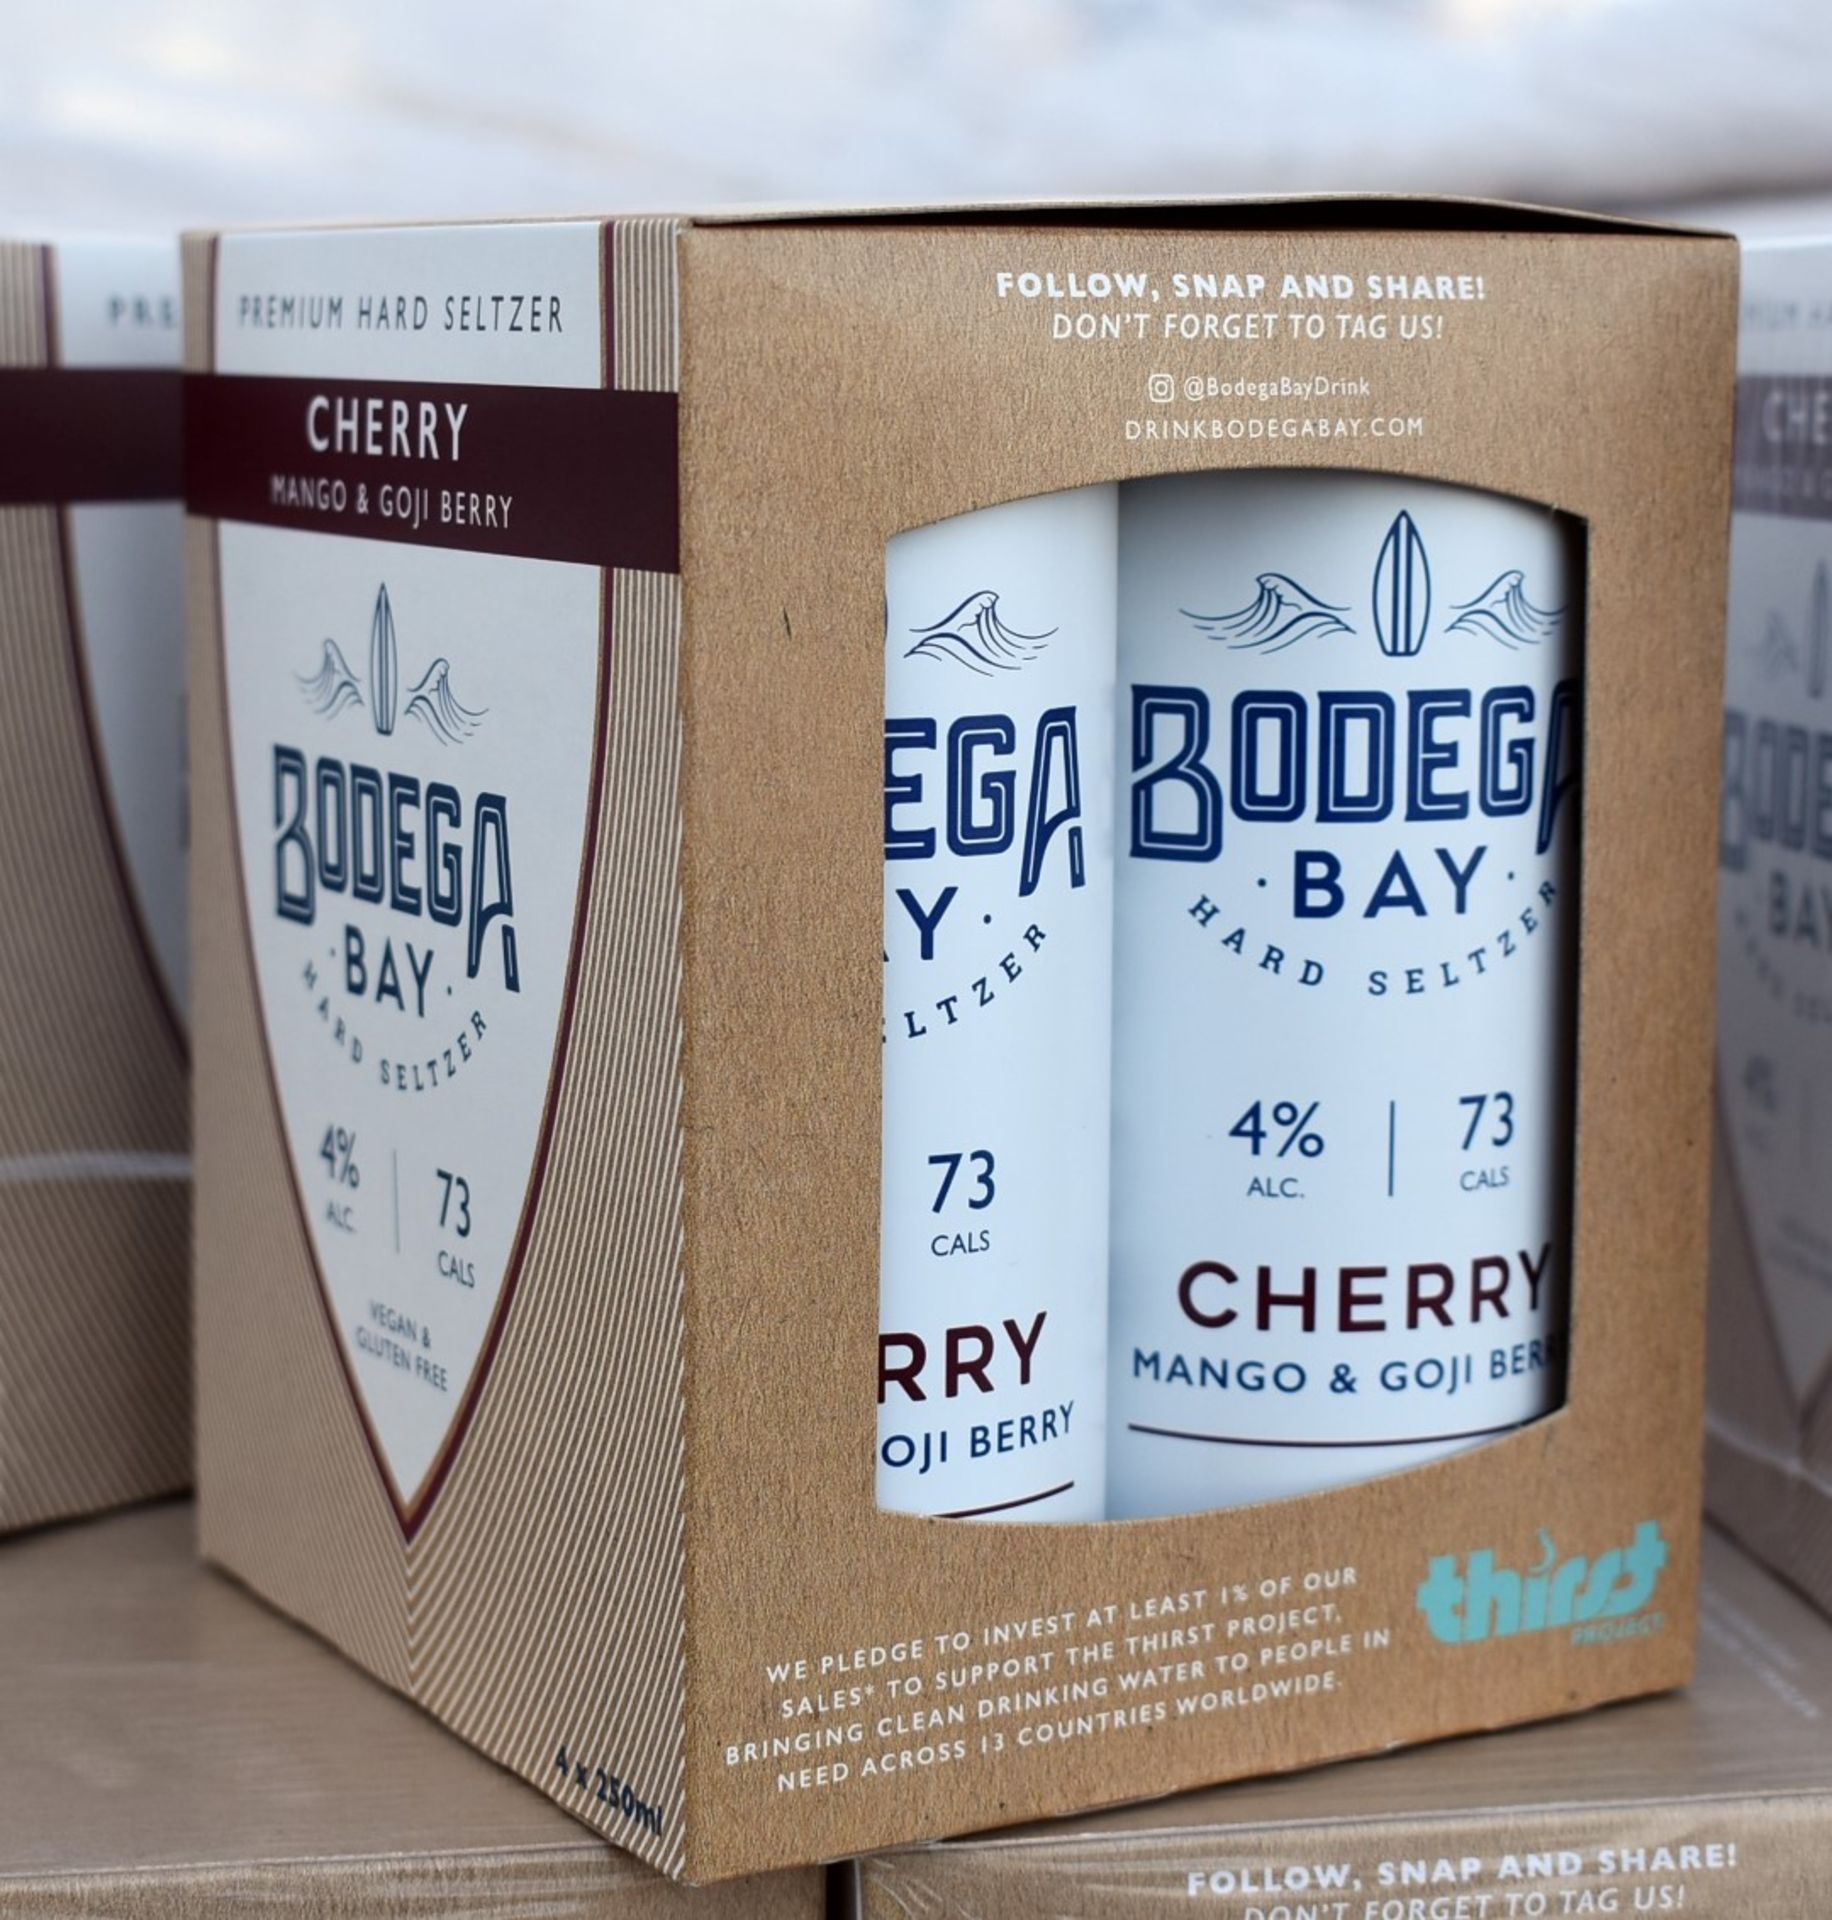 24 x Bodega Bay Hard Seltzer 250ml Alcoholic Sparkling Water Drinks - Cherry Mango & Goji Berry - 4% - Image 4 of 7